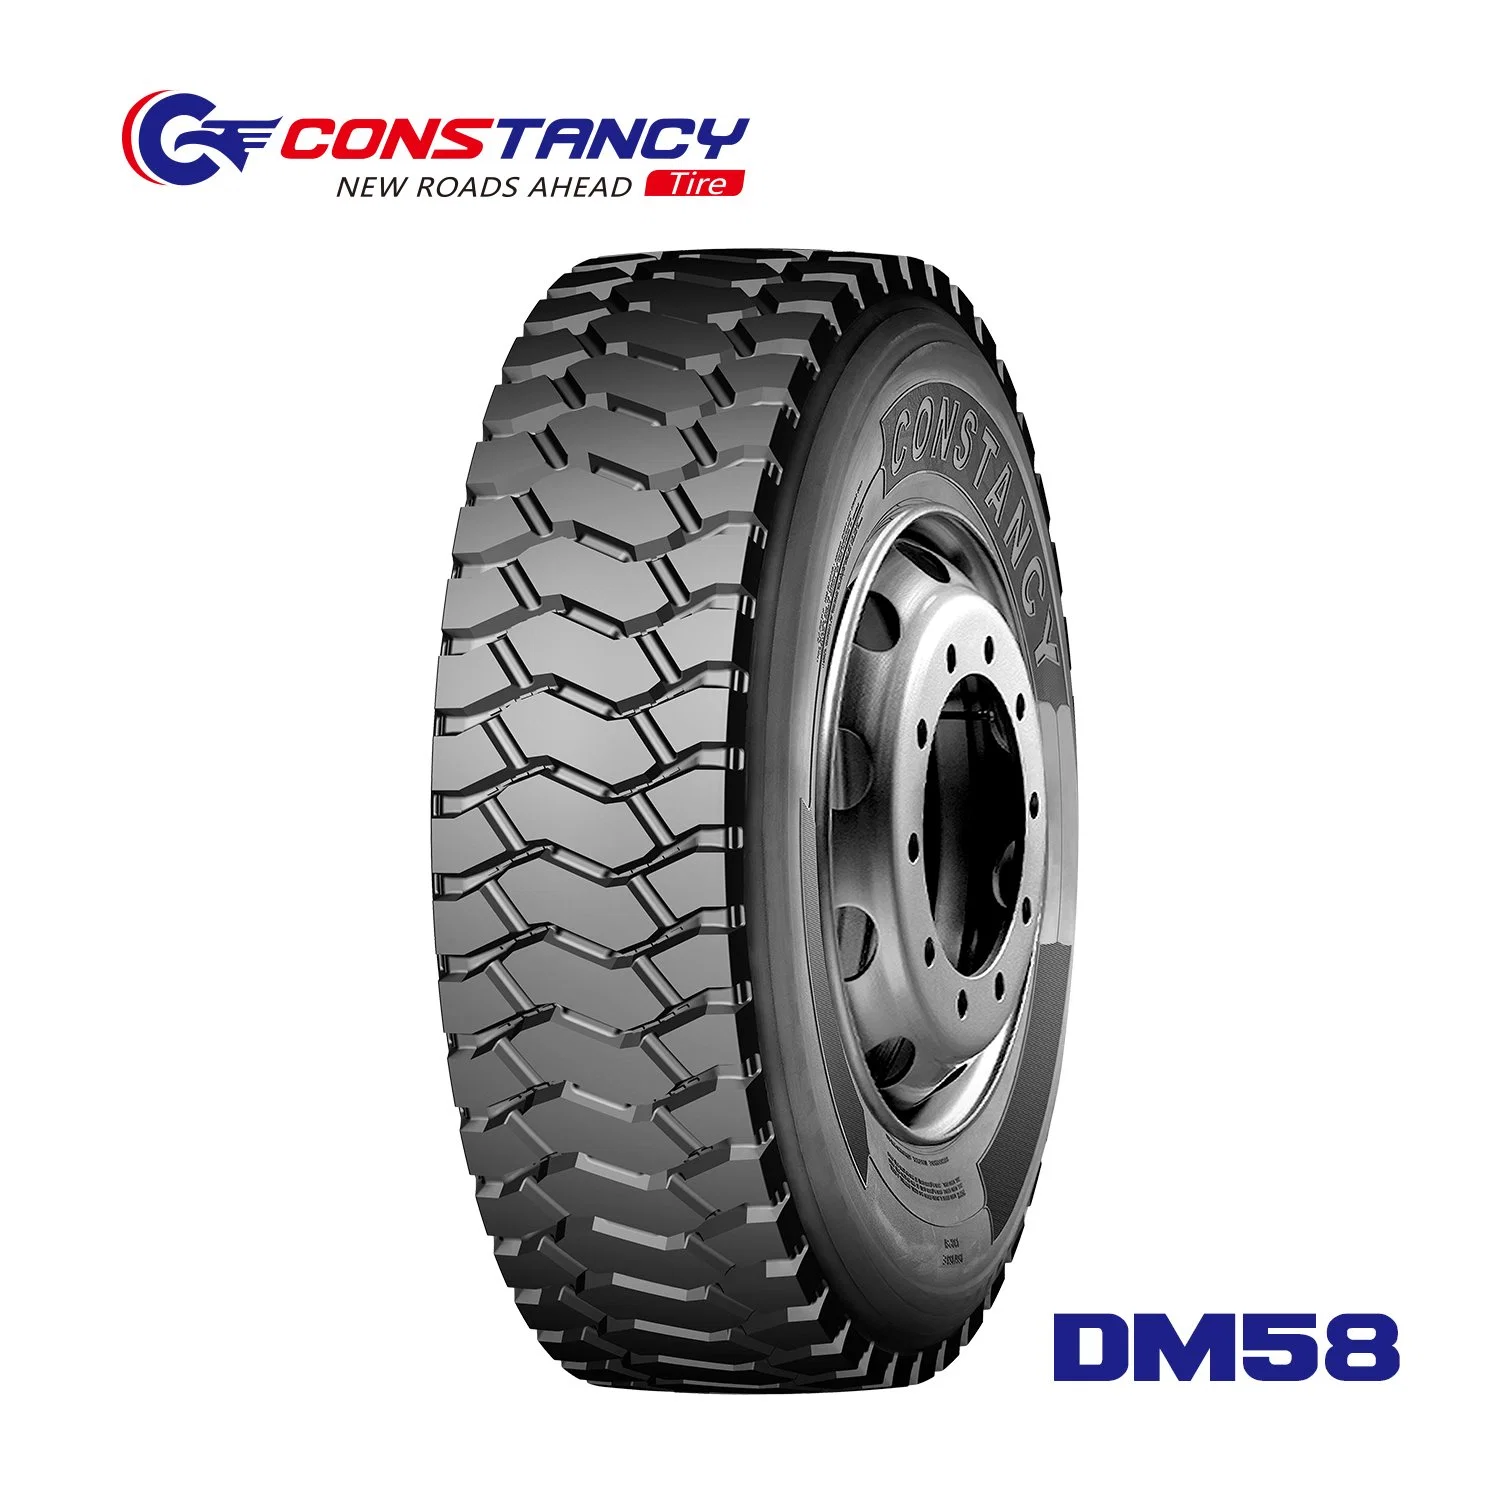 Constancy Dm58 Radial Truck Bus Tyre (12R22.5)